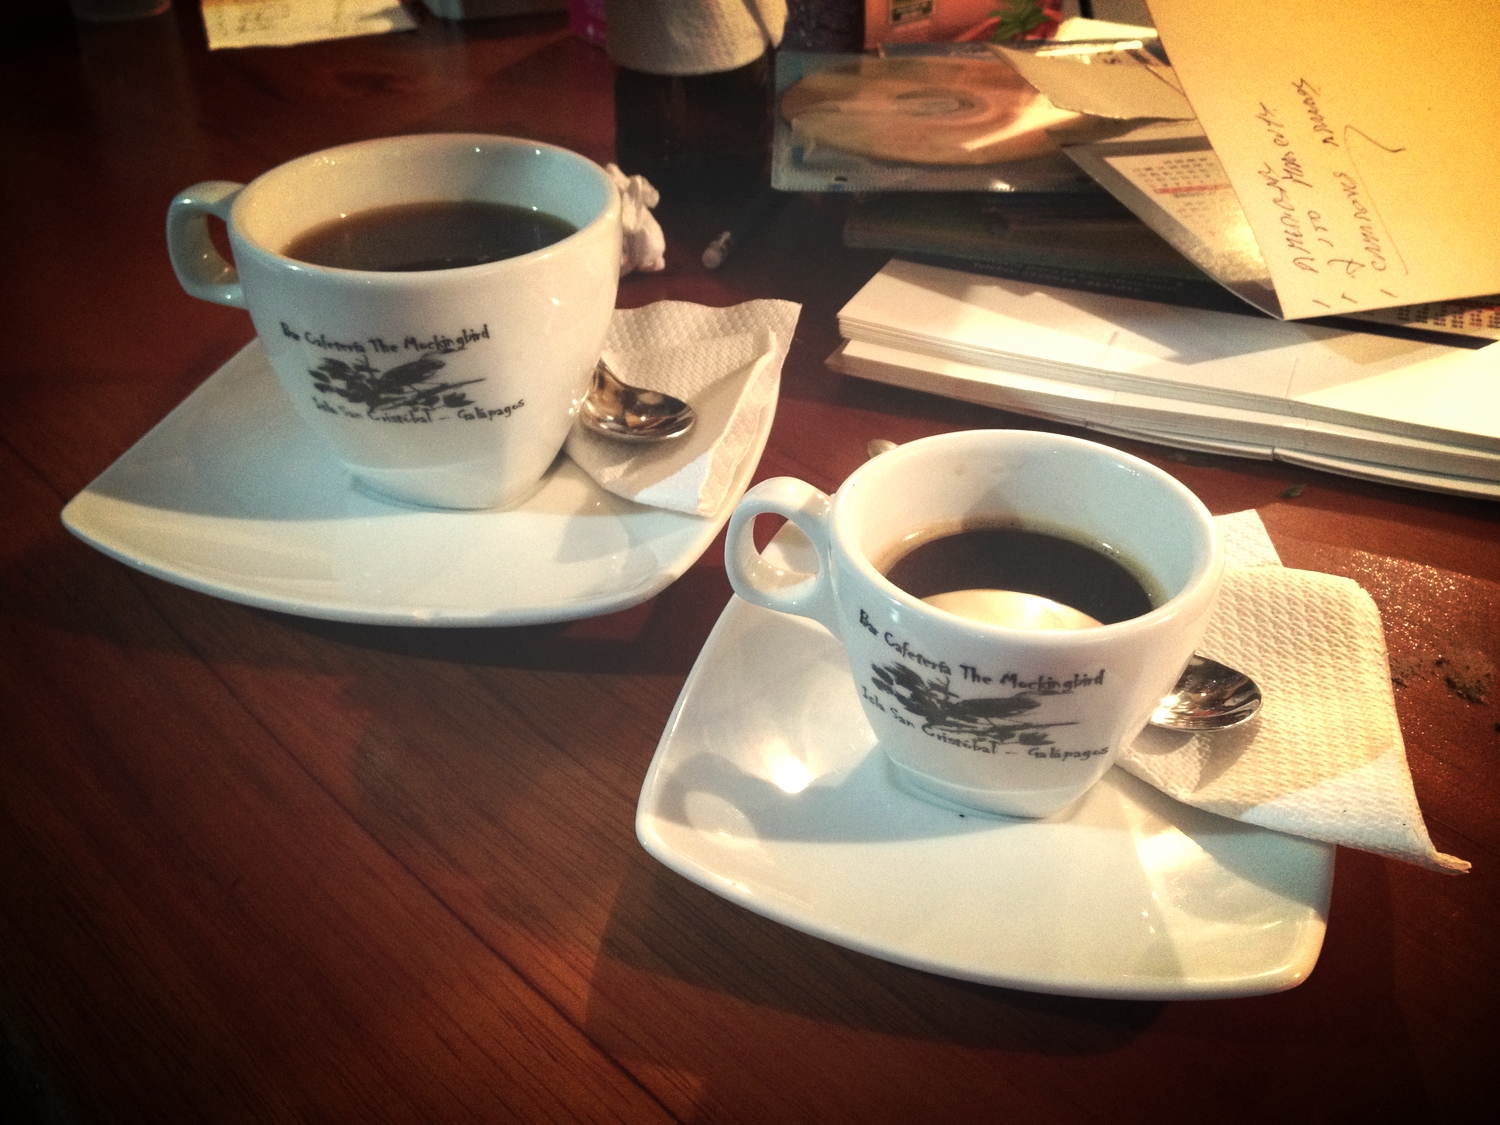 Coffee tasting at the Mockingbird